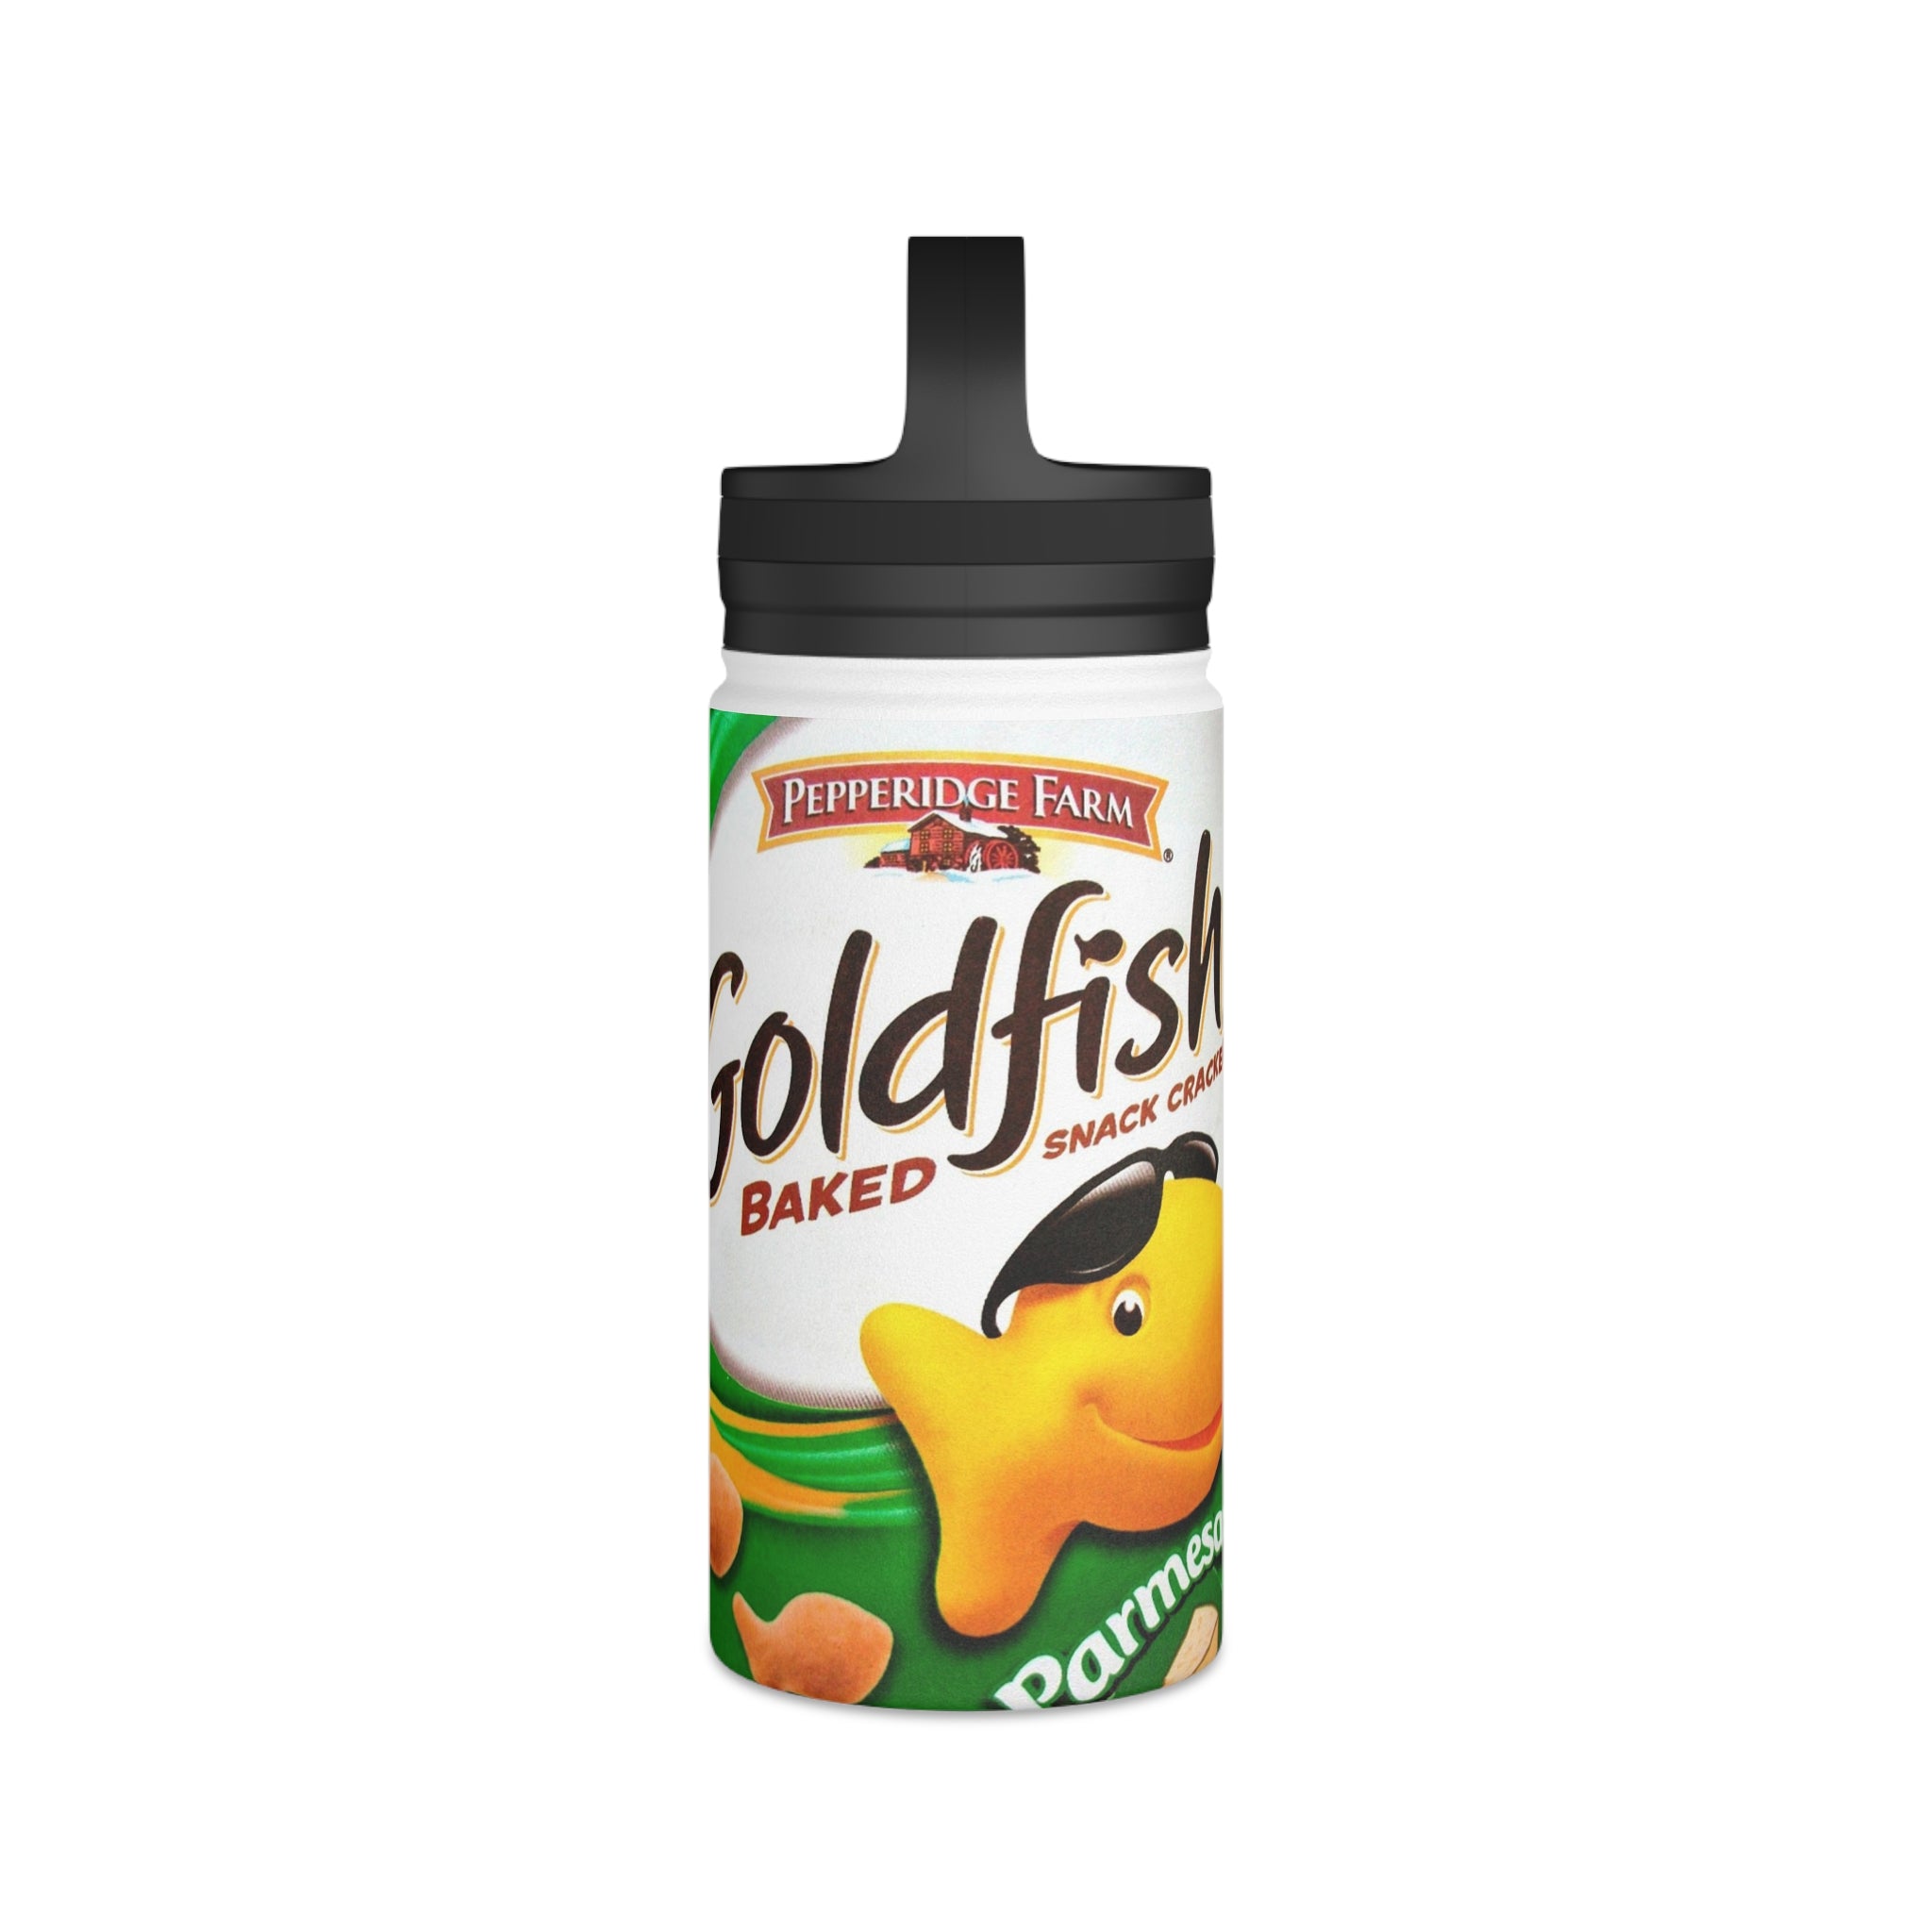 Goldfish Crackers Parmesan Stainless Steel Water Bottle, Handle Lid